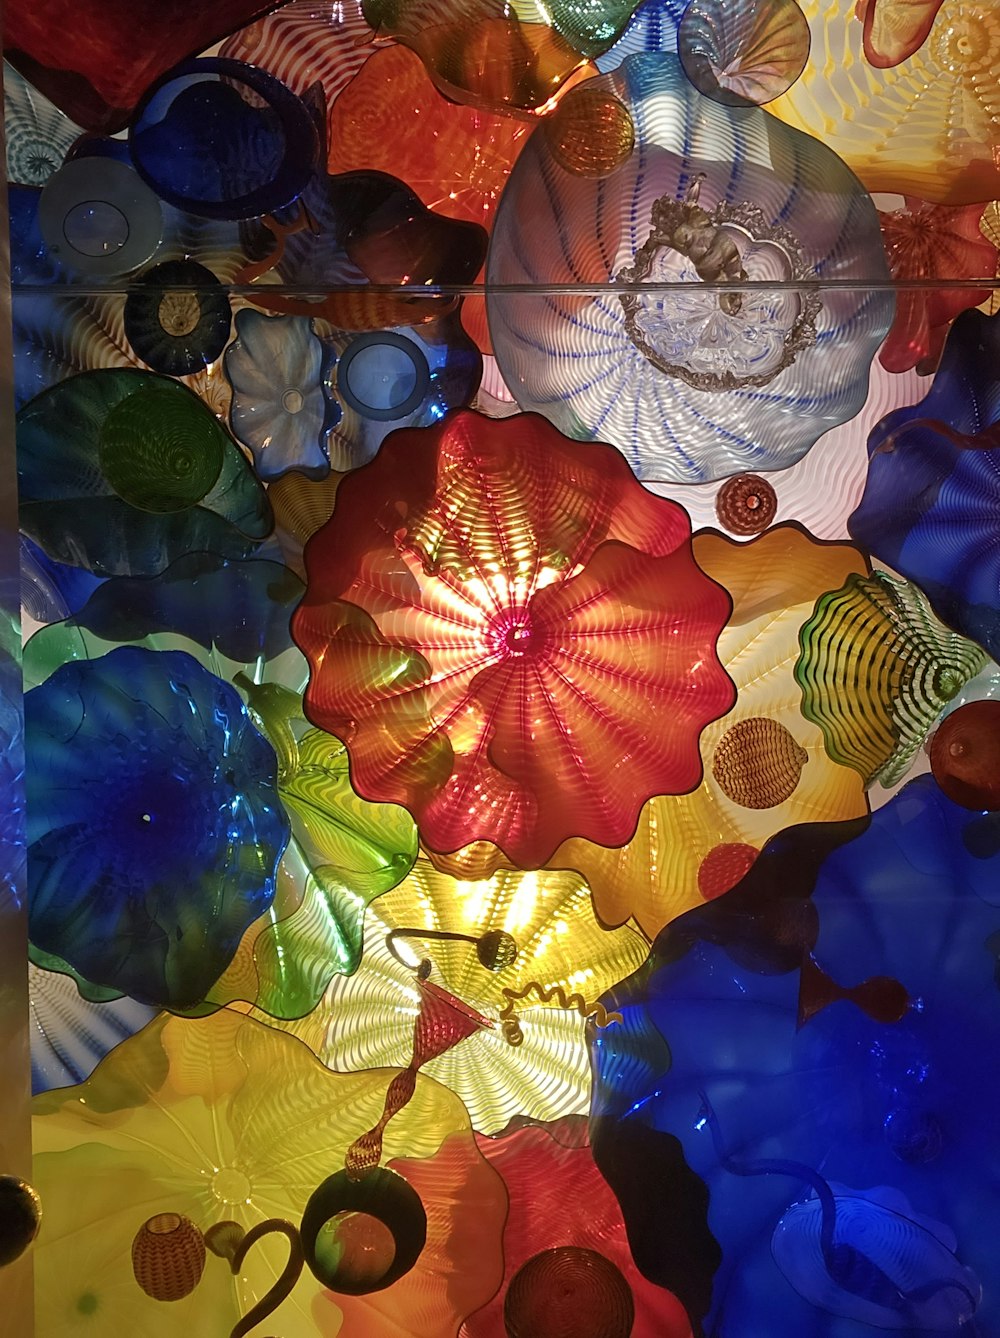 a close up of a multi colored glass sculpture